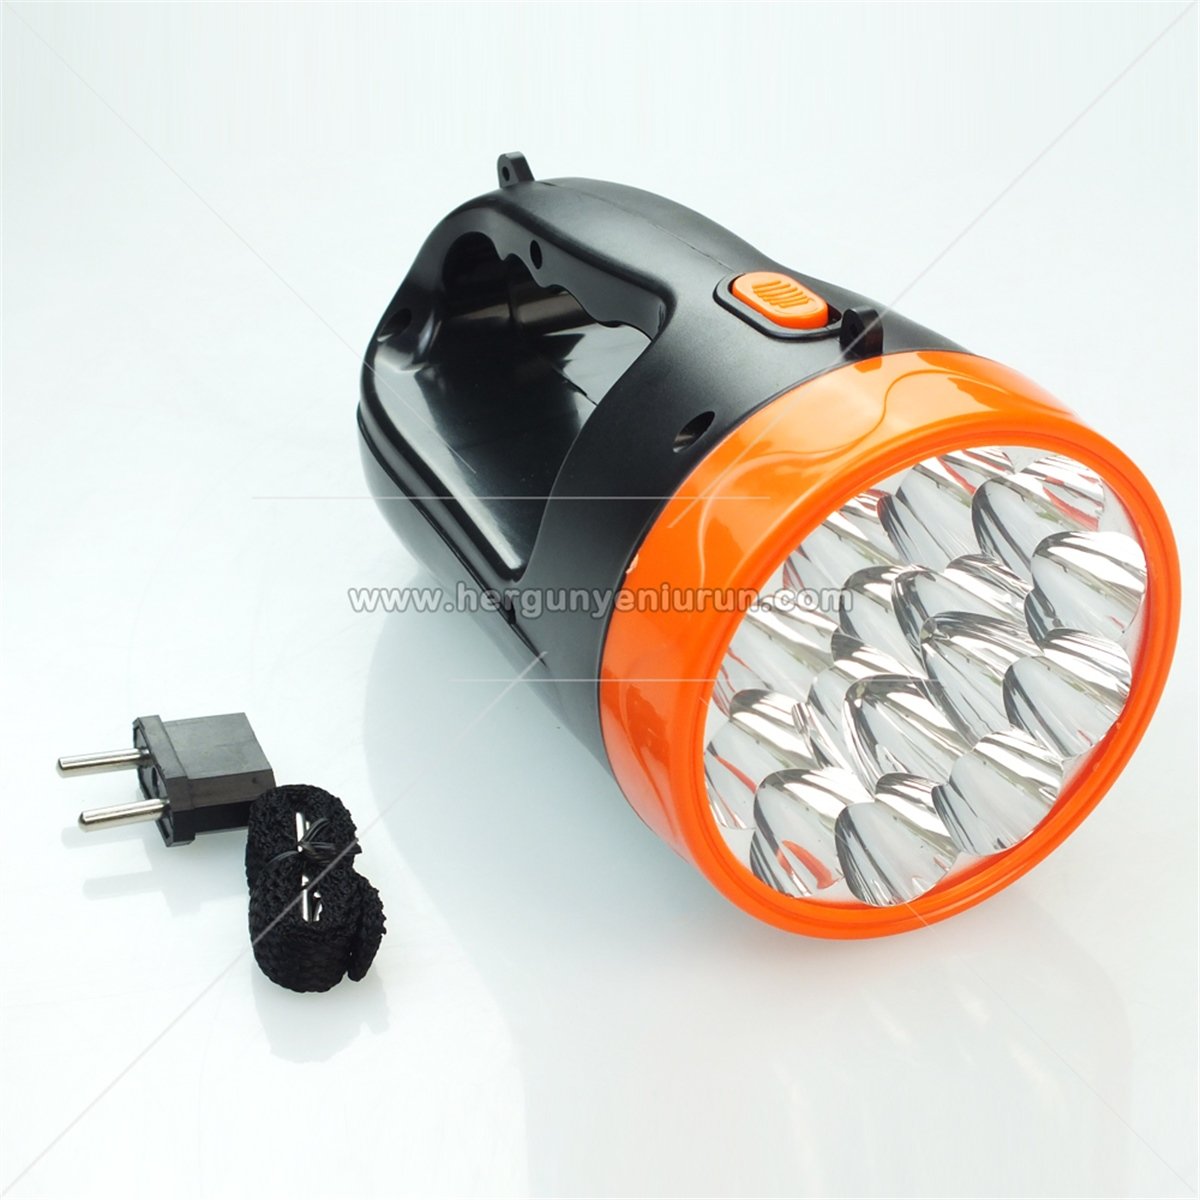 15 Ledli Şarj Edilebilir Fener LEDline | Hergunyeniurun.com